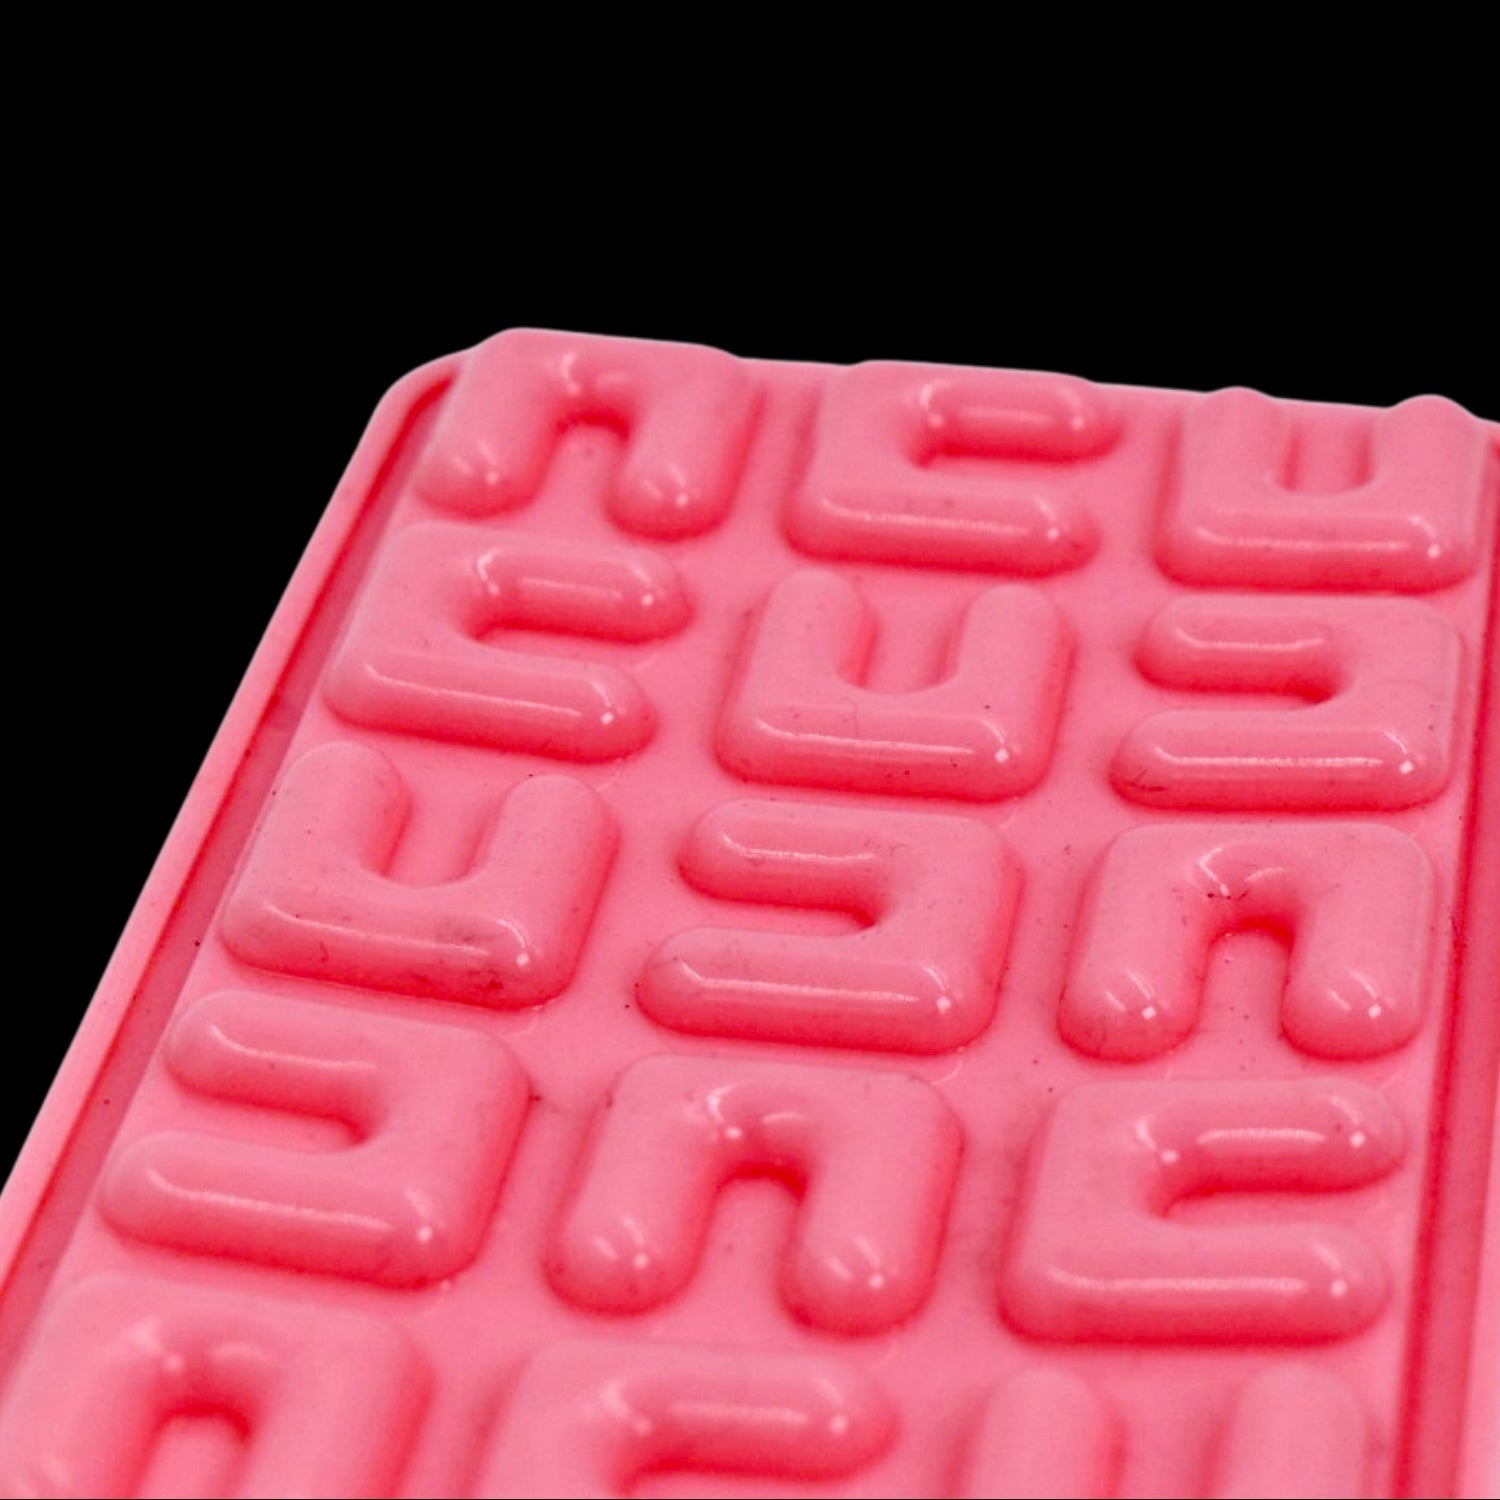 4889 Maze shape chocolate mold tray cake baking mold Flexible silicone chocolate making tool 